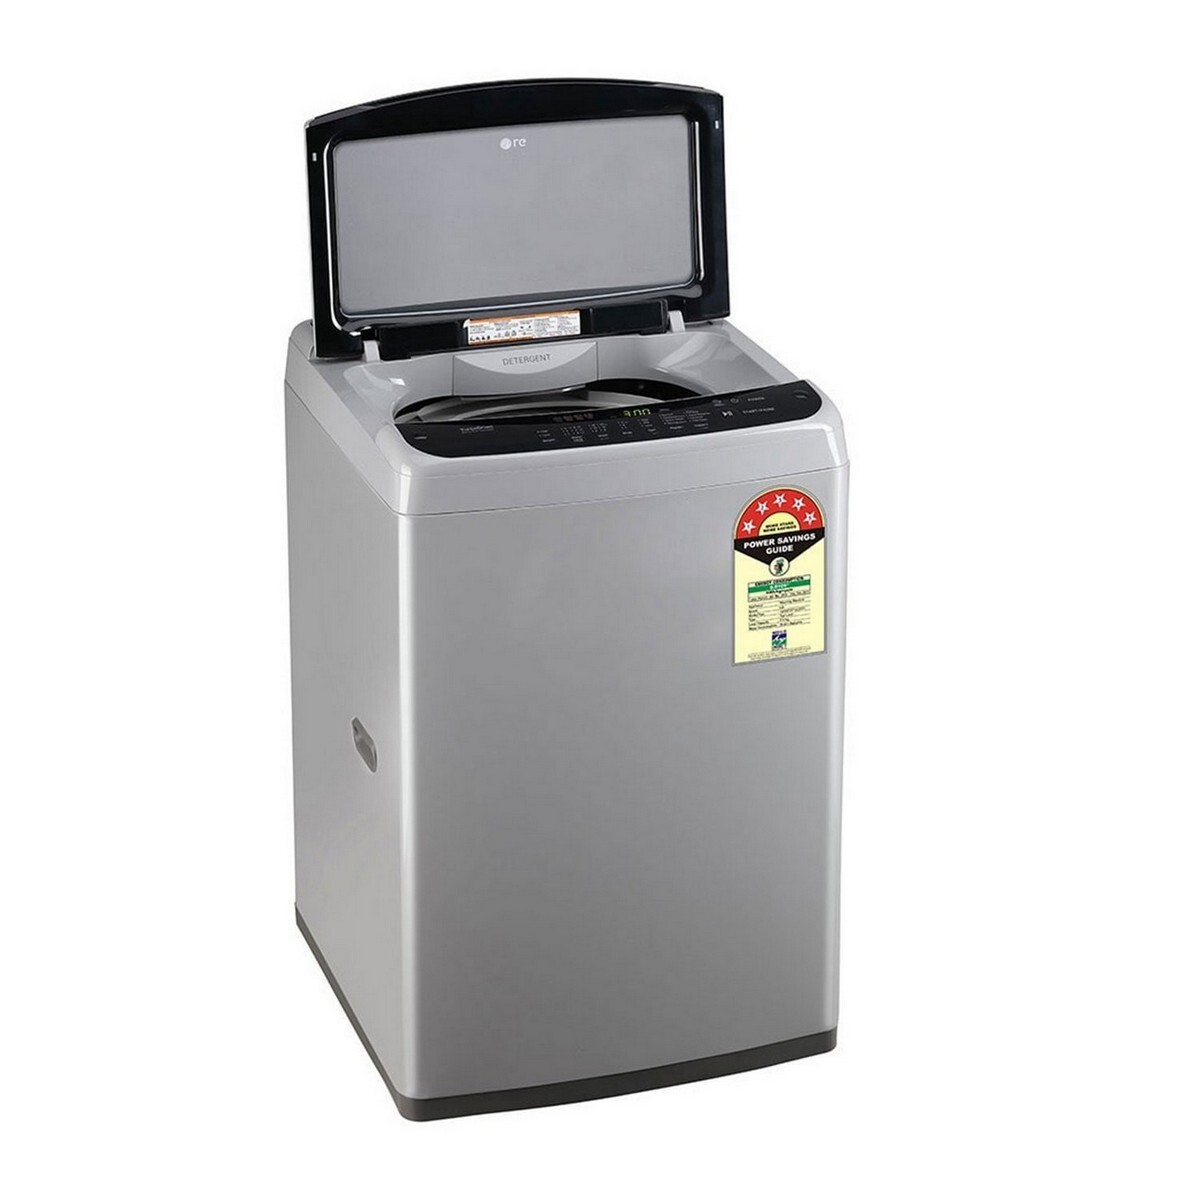 LG Top Load Washing Machine T80SPSF1Z 8Kg Middle Free Silver